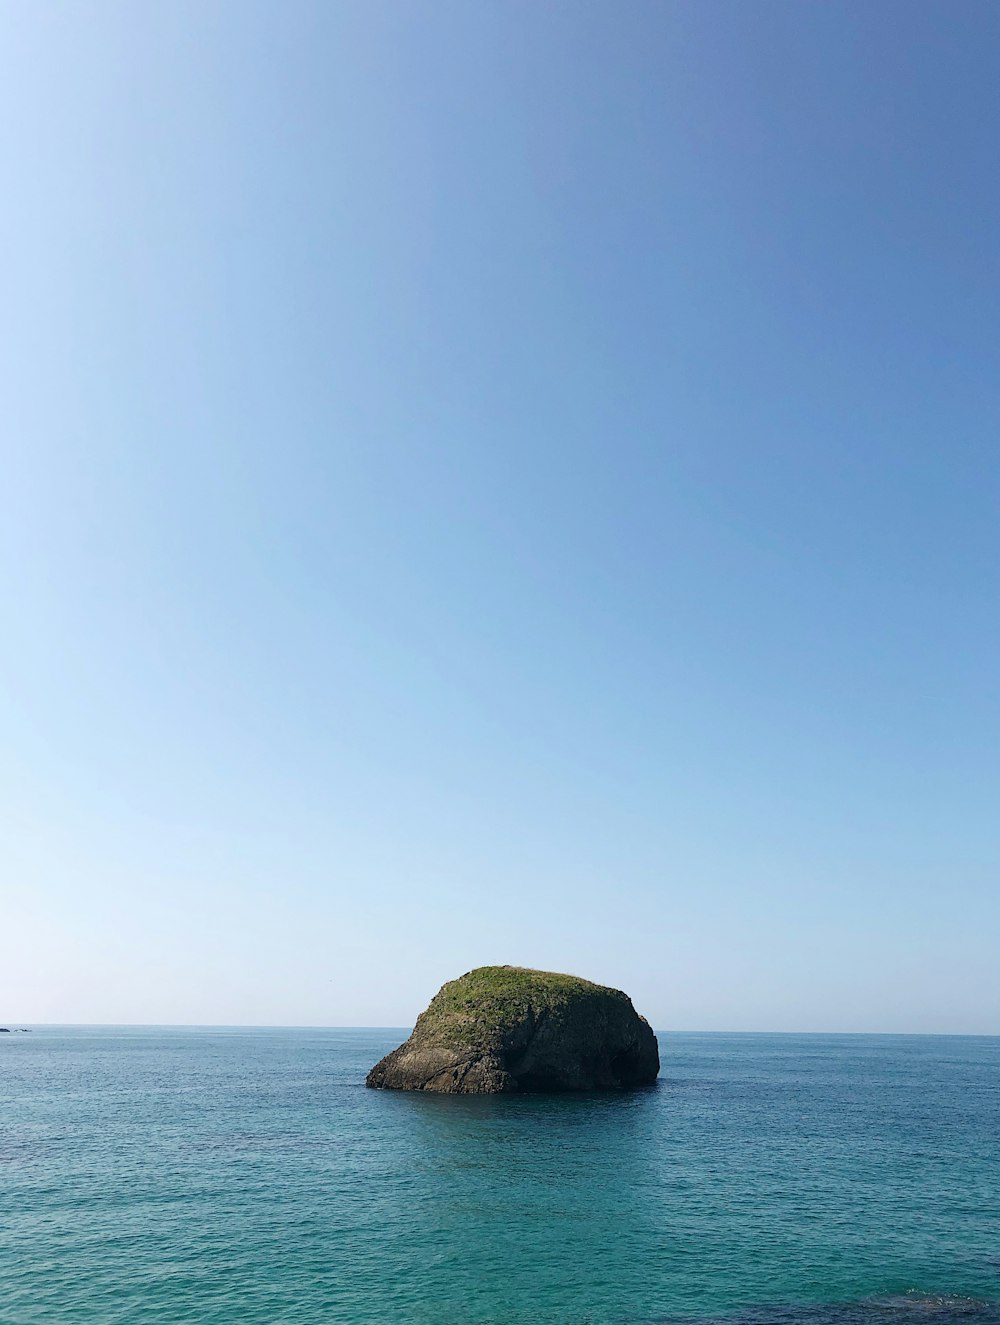 brown rock formation on blue sea under blue sky during daytime